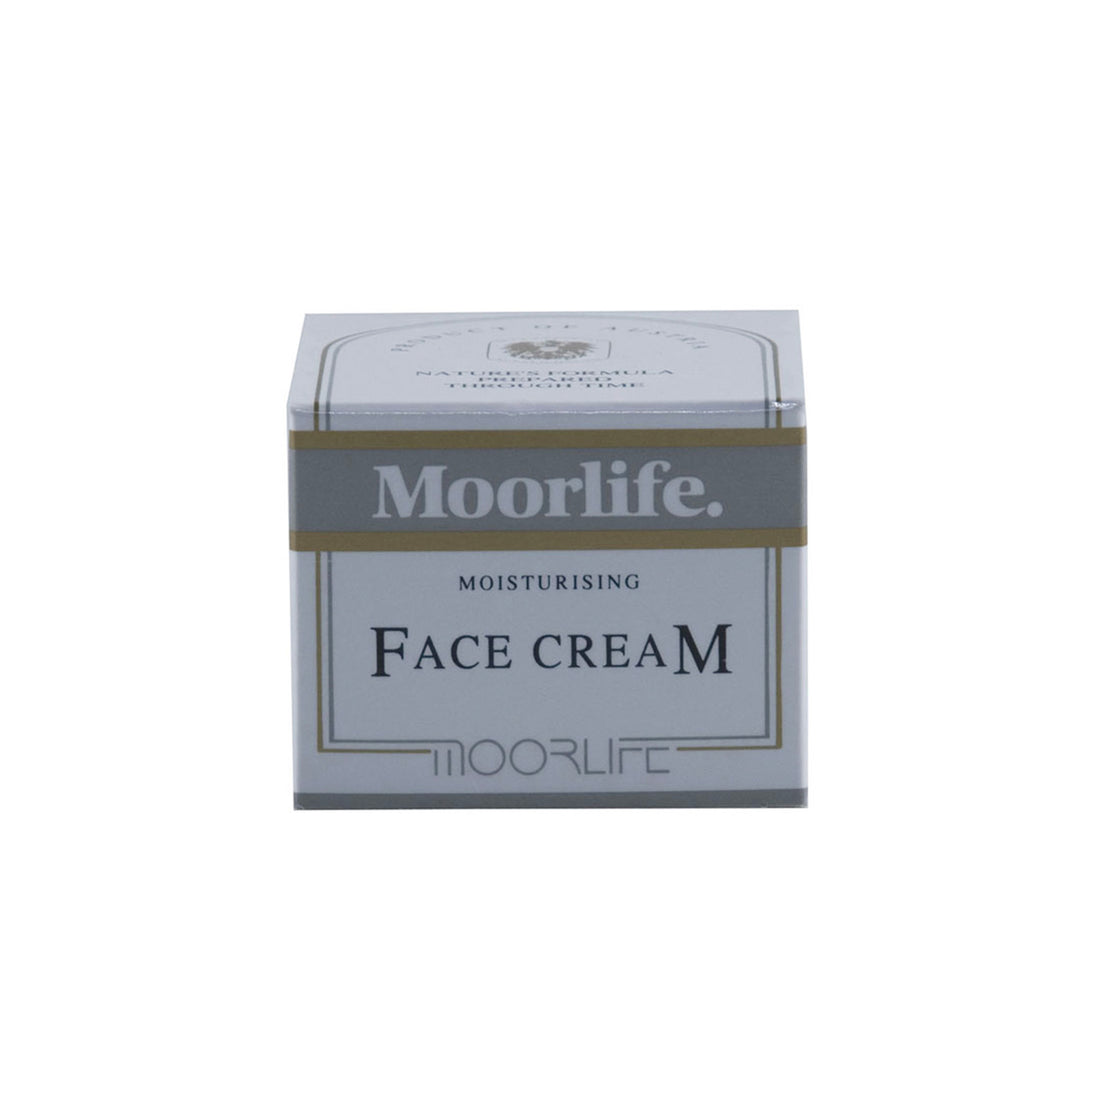 Moorlife Face Cream 70g